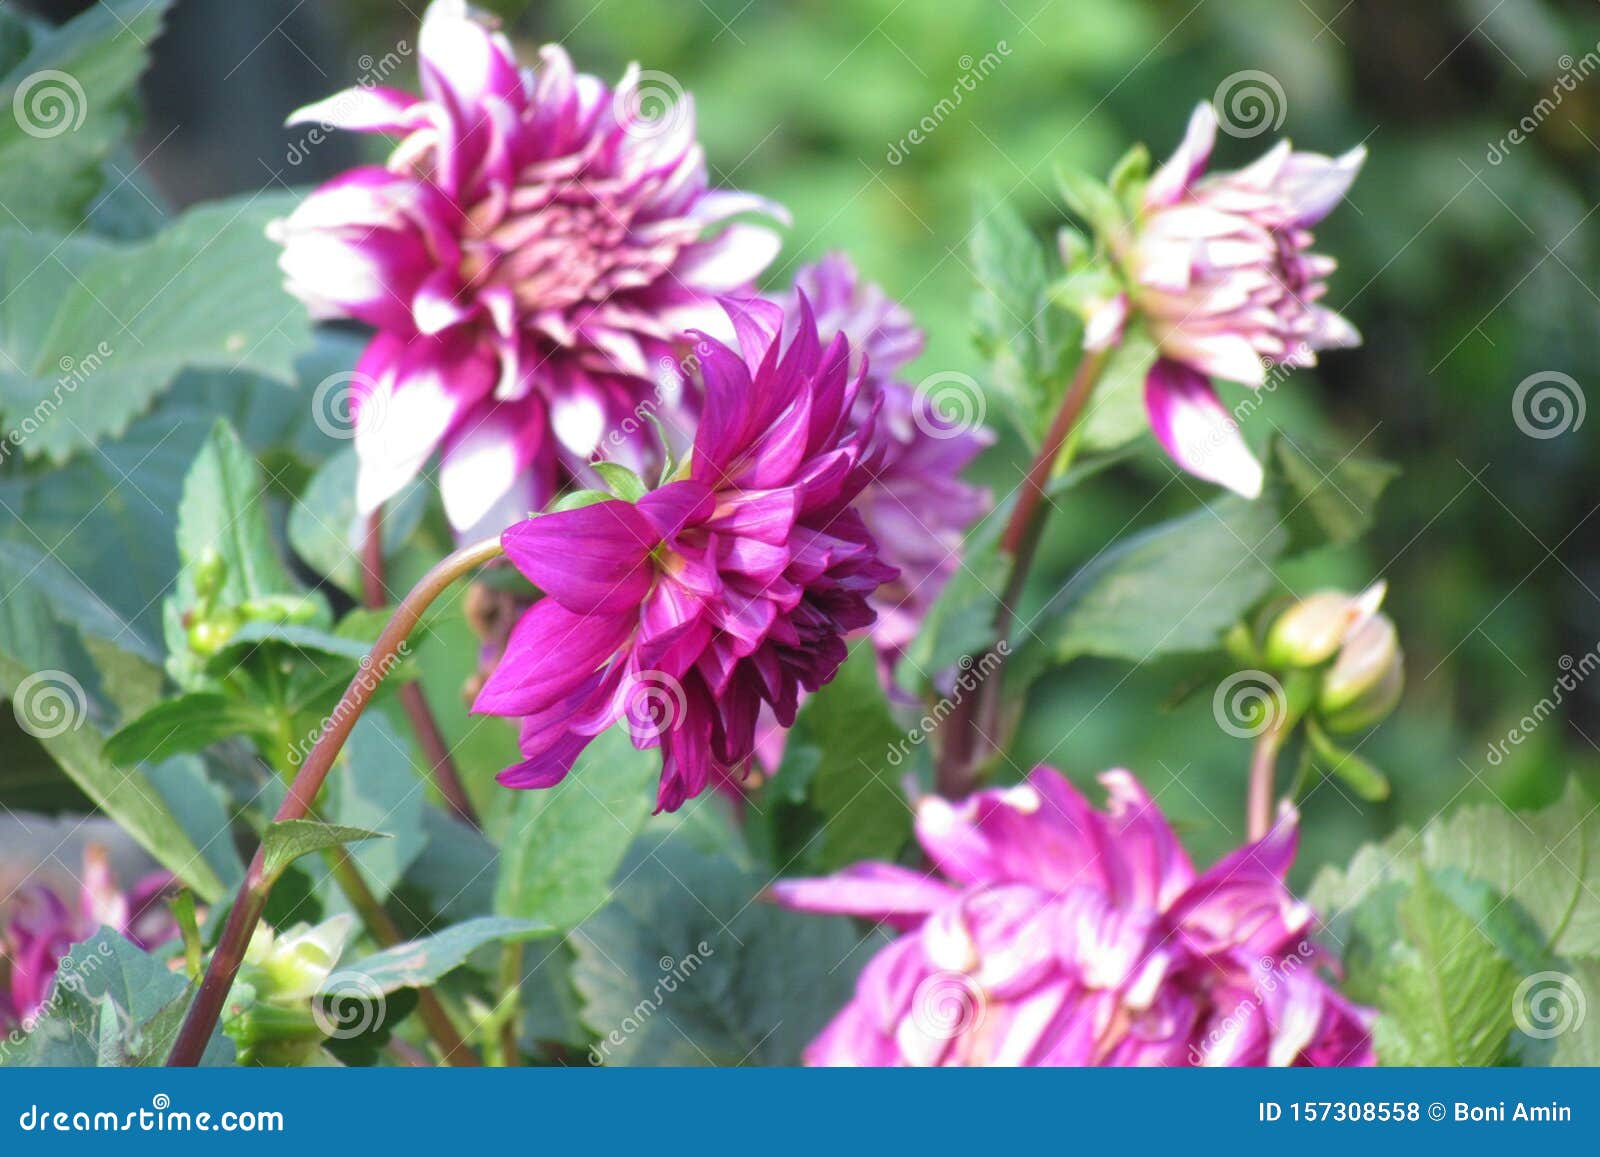 Beautiful Flower Good Morning Wallpaper Stock Photo - Image of beautiful,  nataralwallpaper: 157308558